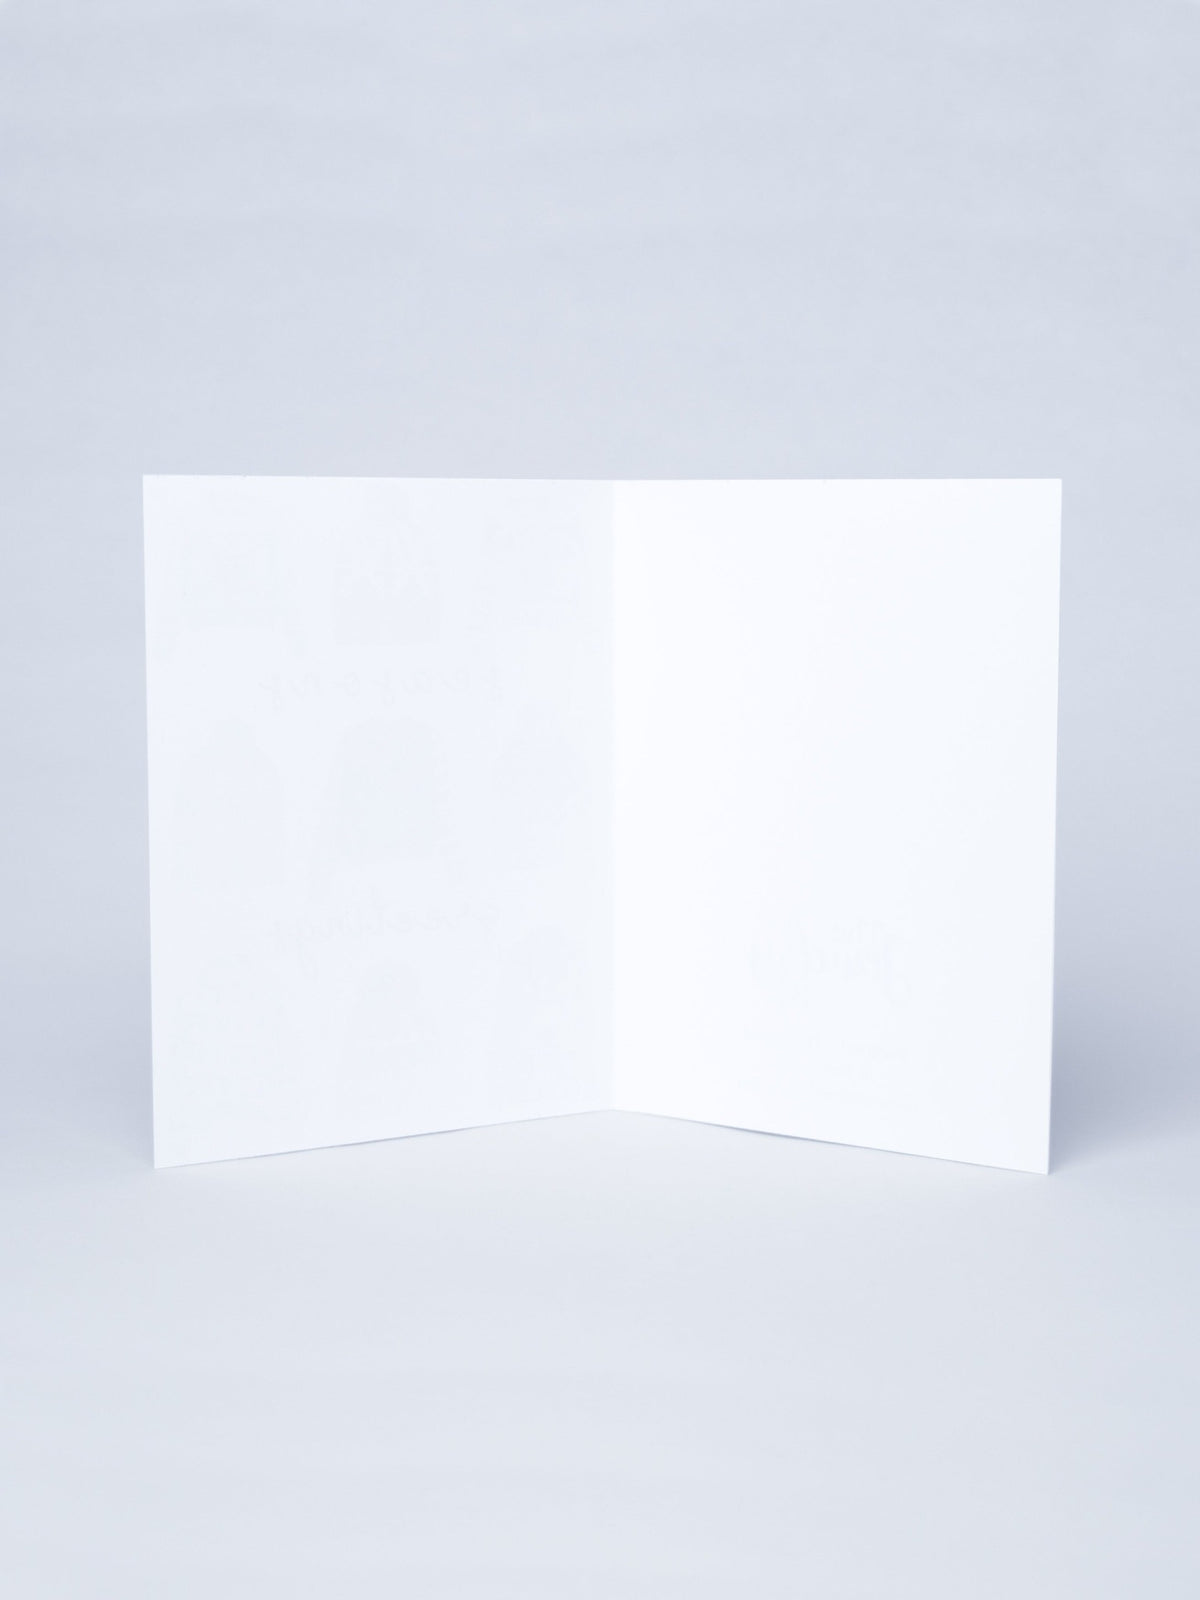 white blank greeting card